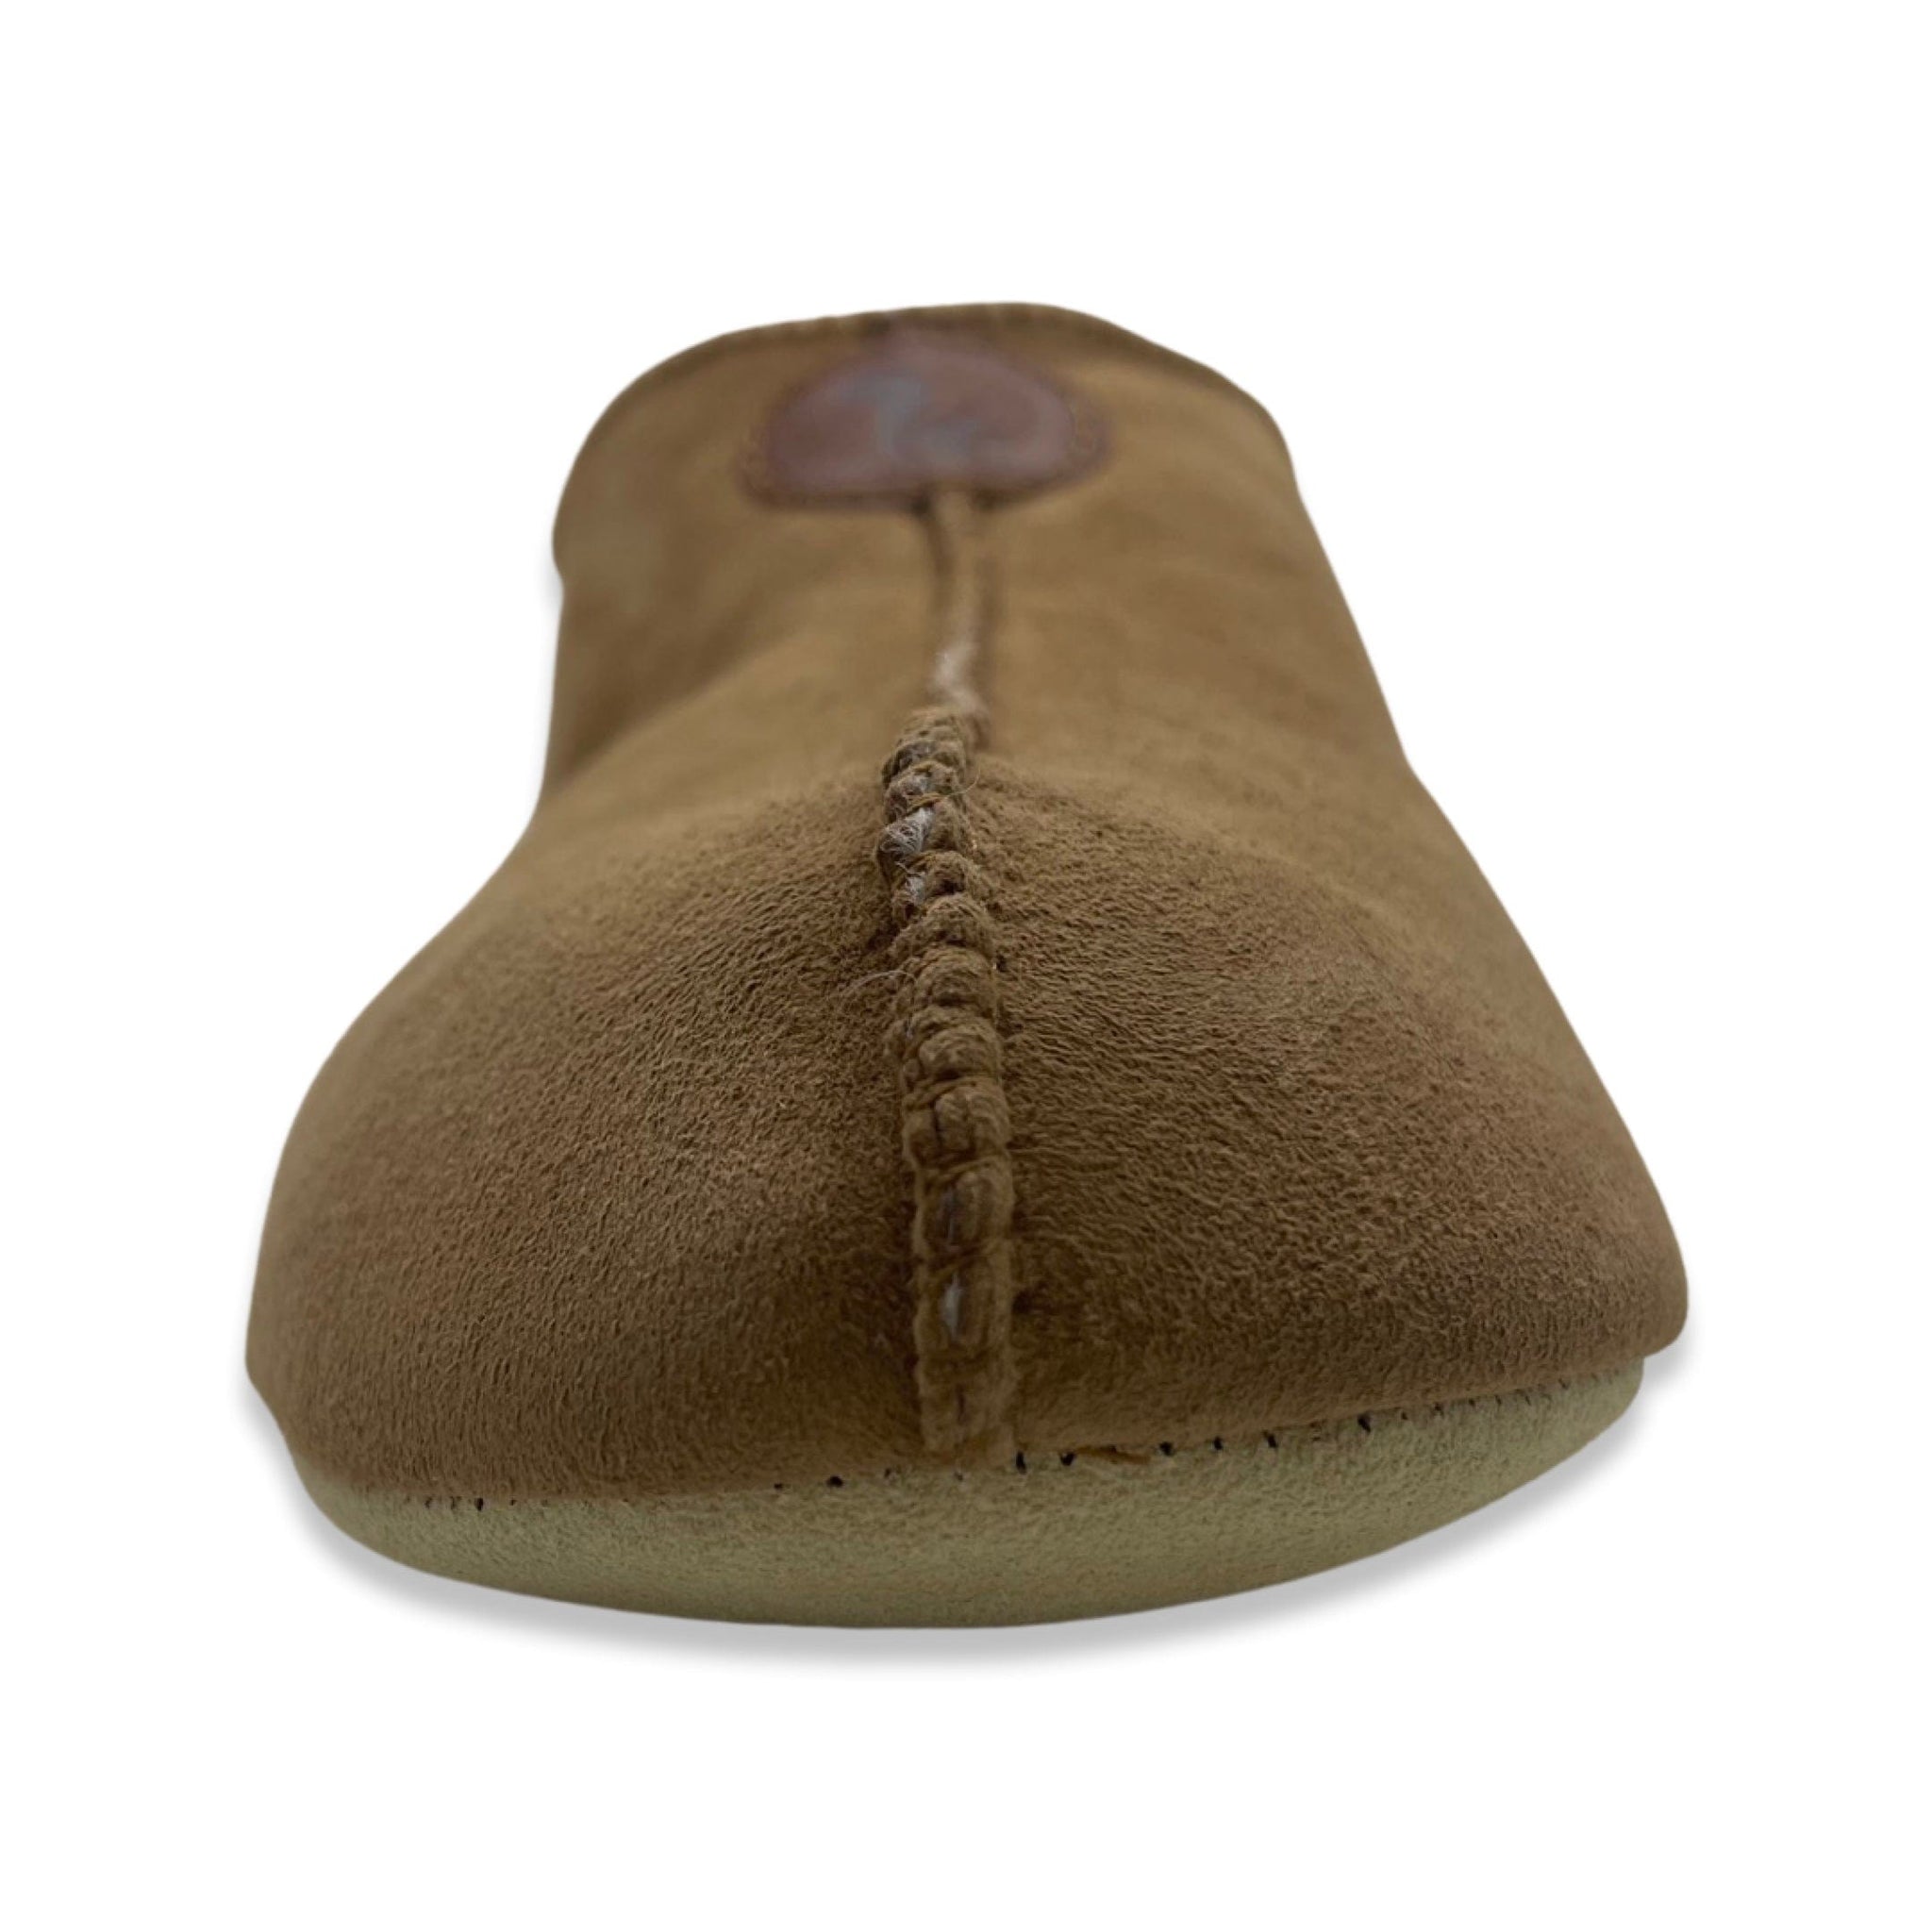 NAT 2 calçat thies 1856 ® Sheep Slipper Boot anacard (W) moda sostenible moda ètica